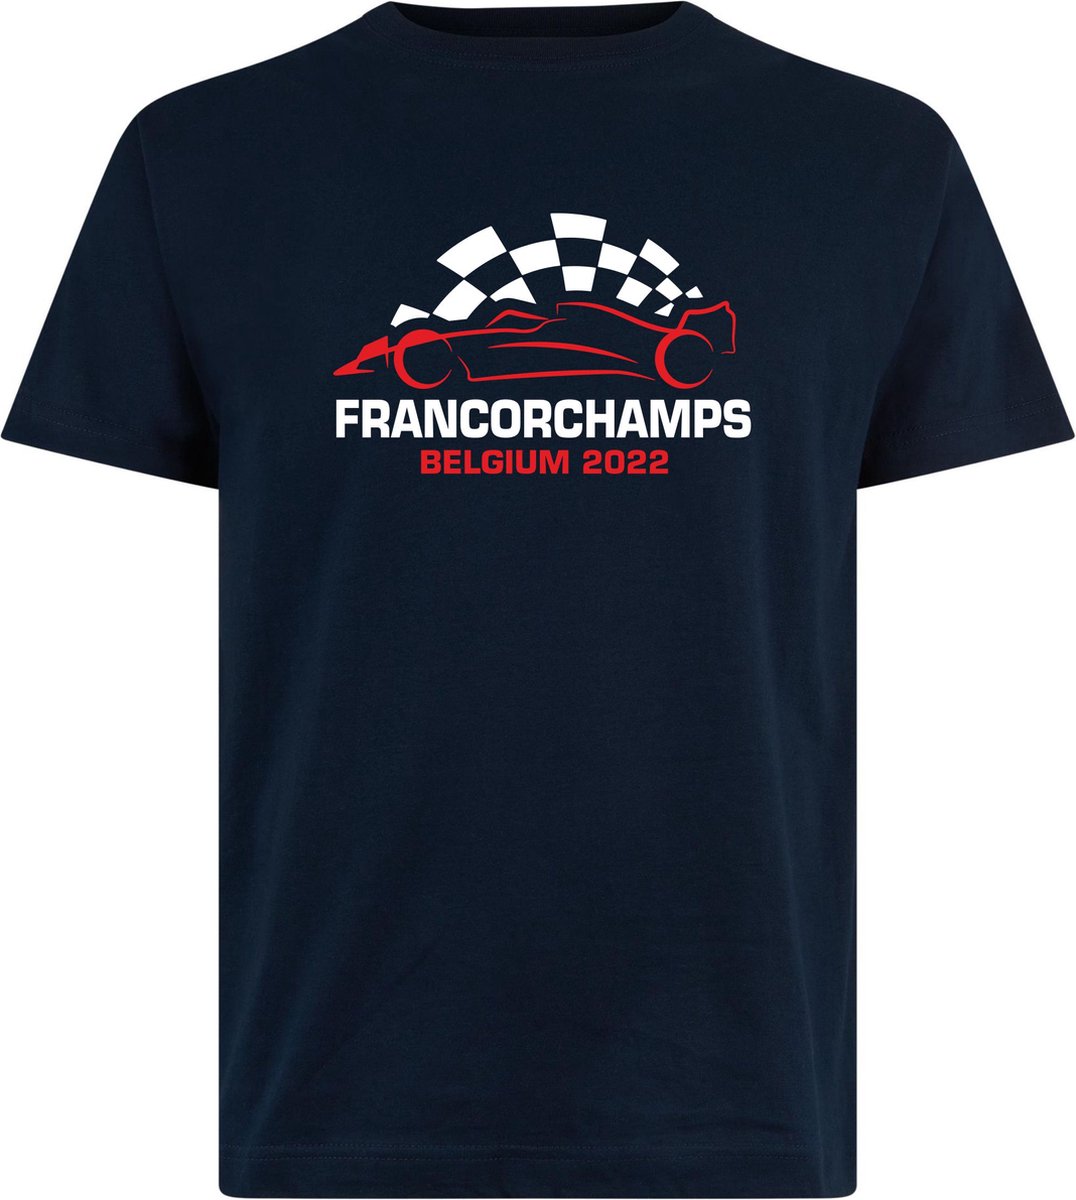 T-shirt Francorchamps Belgium 2022 met raceauto | Max Verstappen / Red Bull Racing / Formule 1 fan | Grand Prix Circuit Spa-Francorchamps | kleding shirt | Navy | maat 5XL